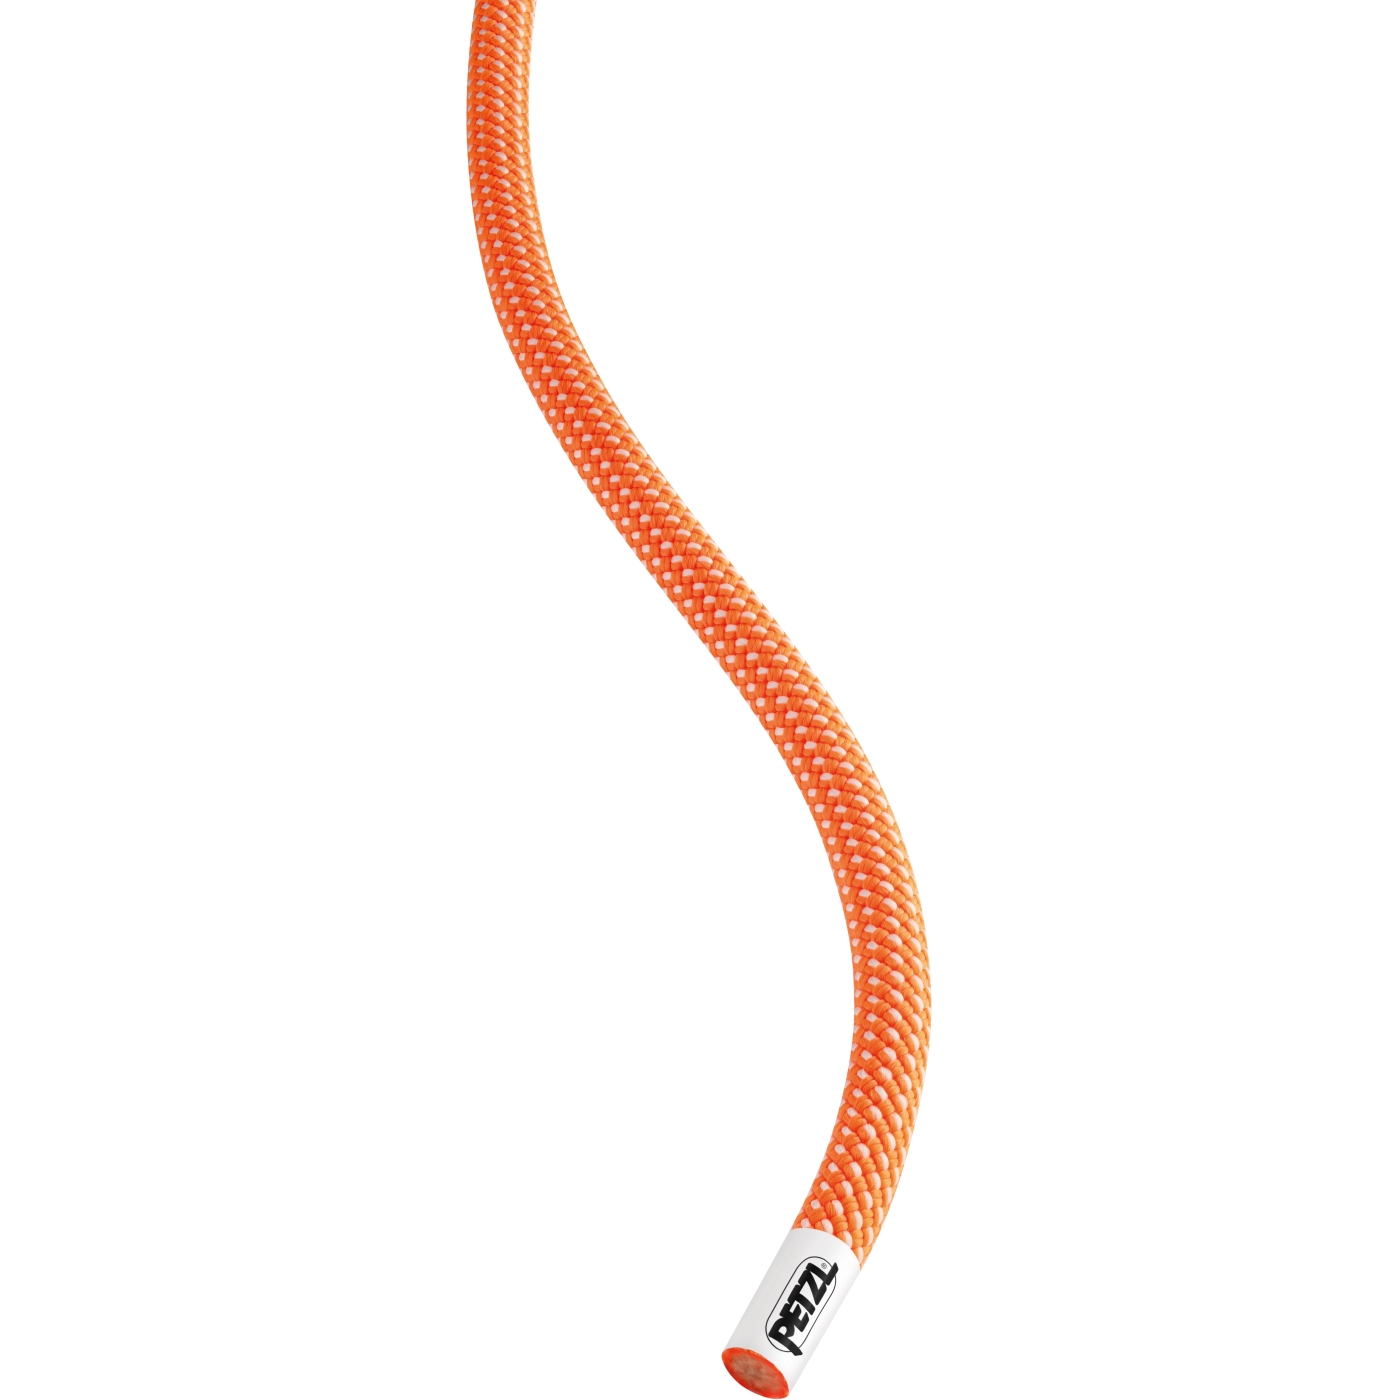 Productfoto van Petzl Volta 9.2mm Touw - 80m - oranje